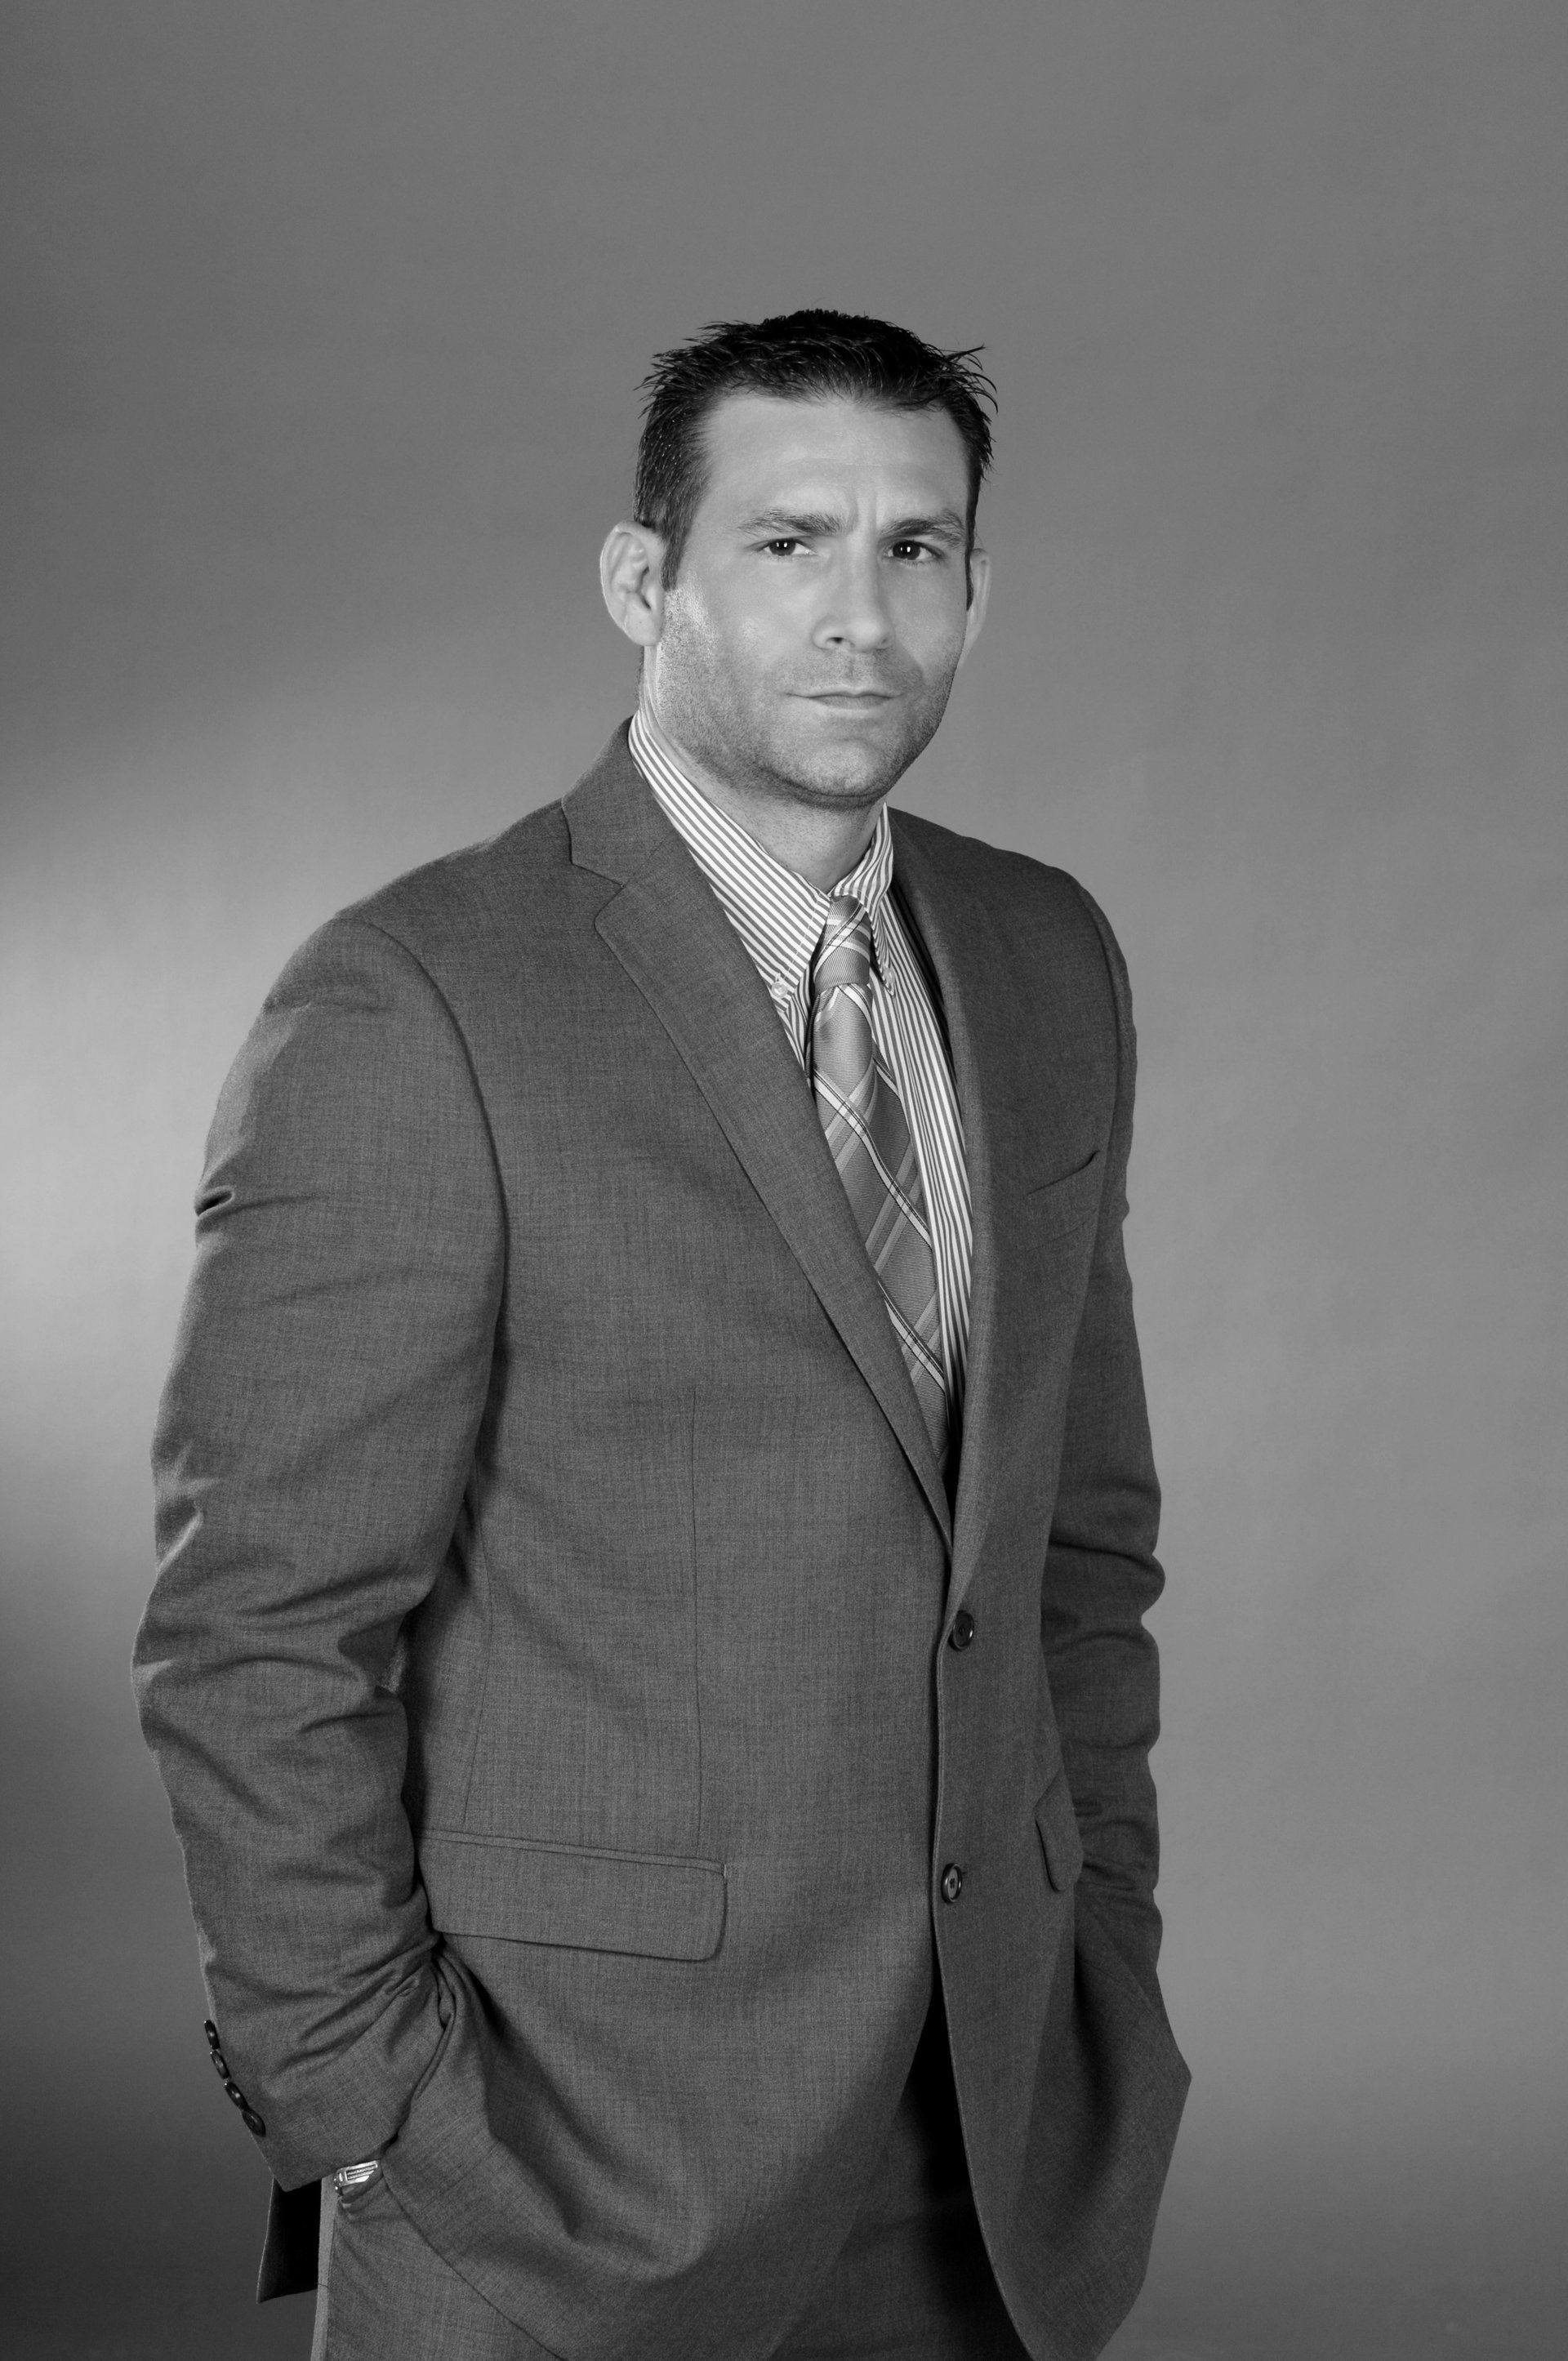 An image of Fort Lauderdale criminal attorney Antonio D. Quinn